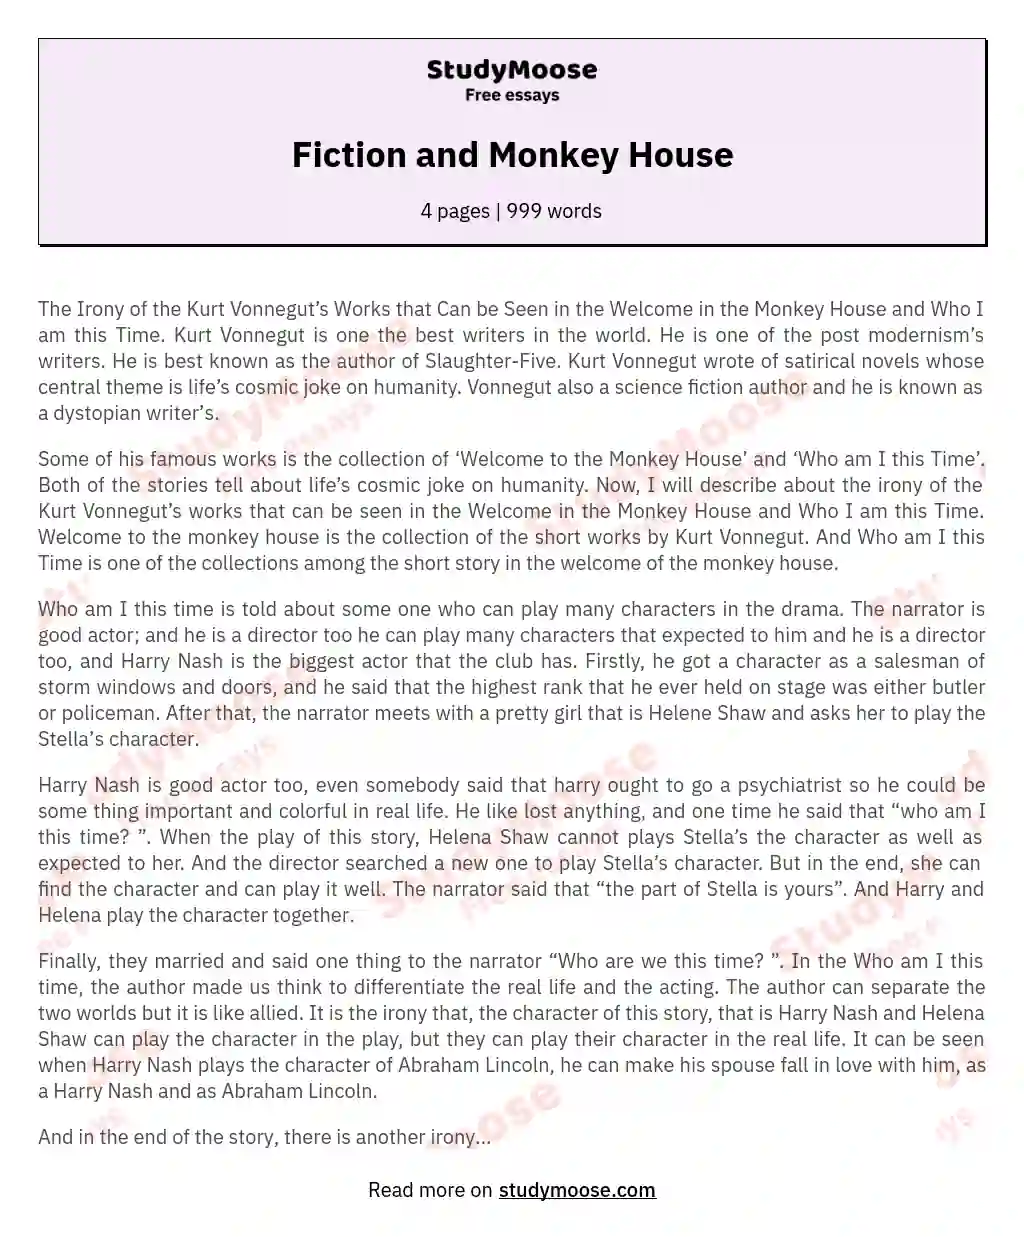 Fiction and Monkey House